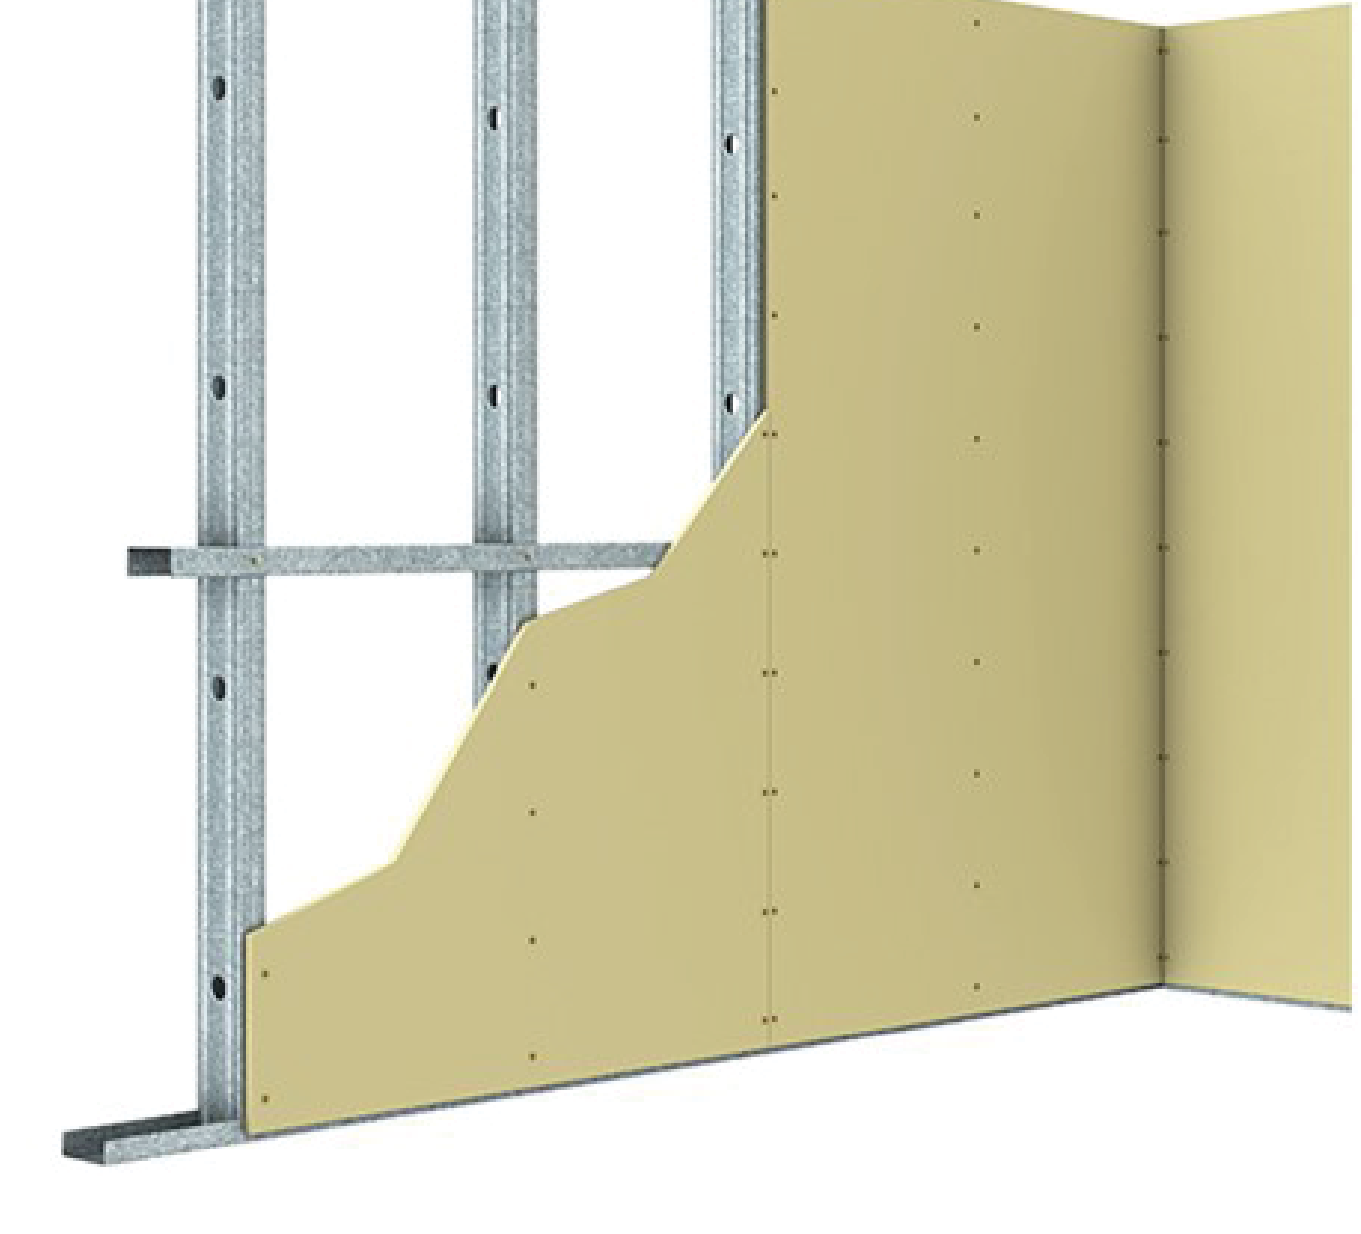 Rondo Steel Stud & Track Wall Framing System